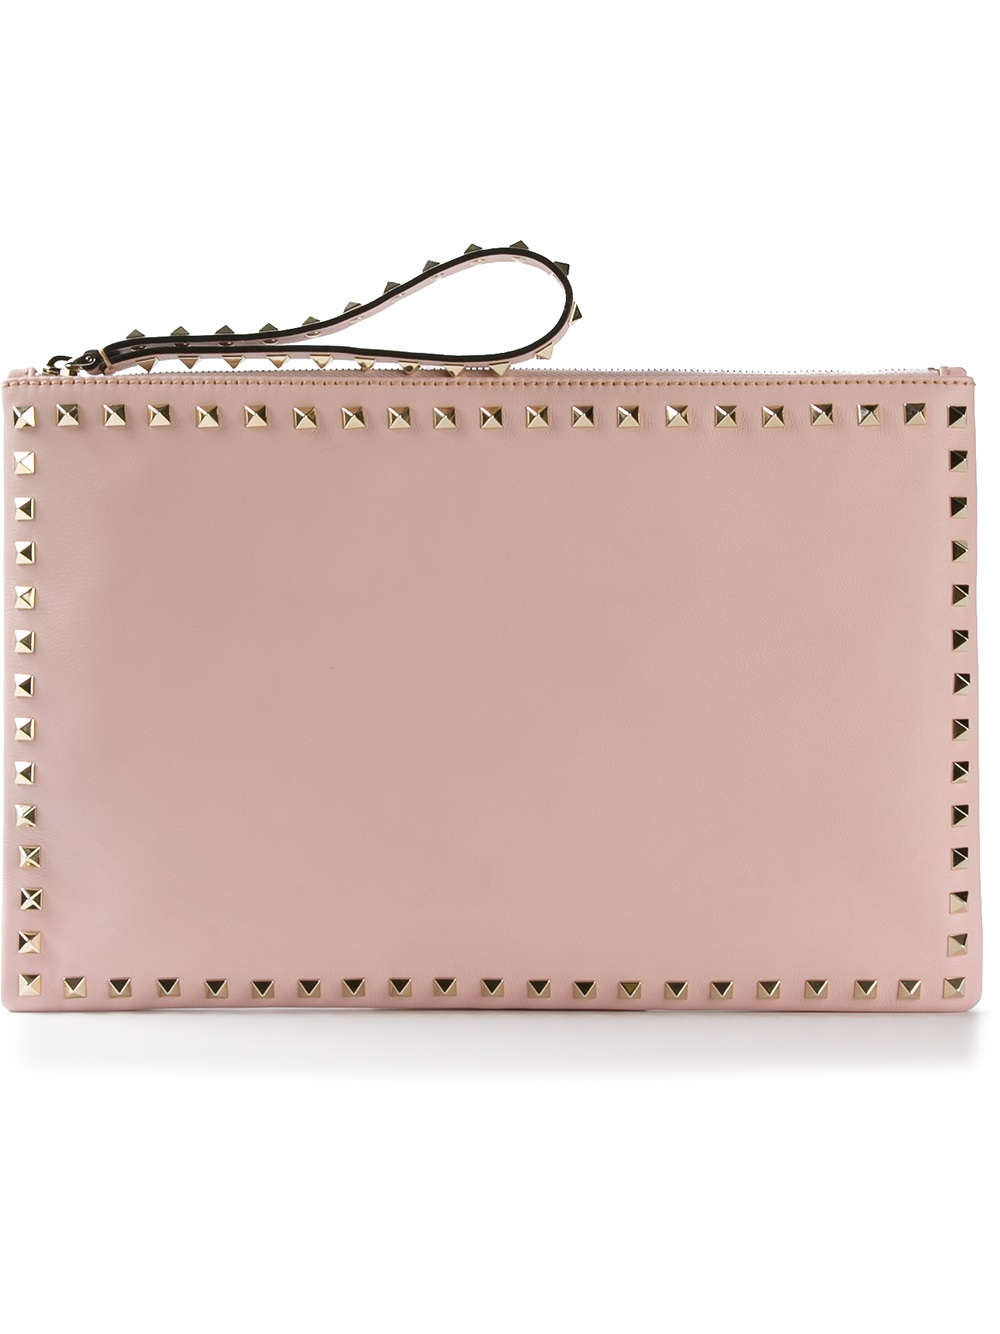 Valentino Rockstud Clutch Bag in Pink & Purple (Pink) - Lyst